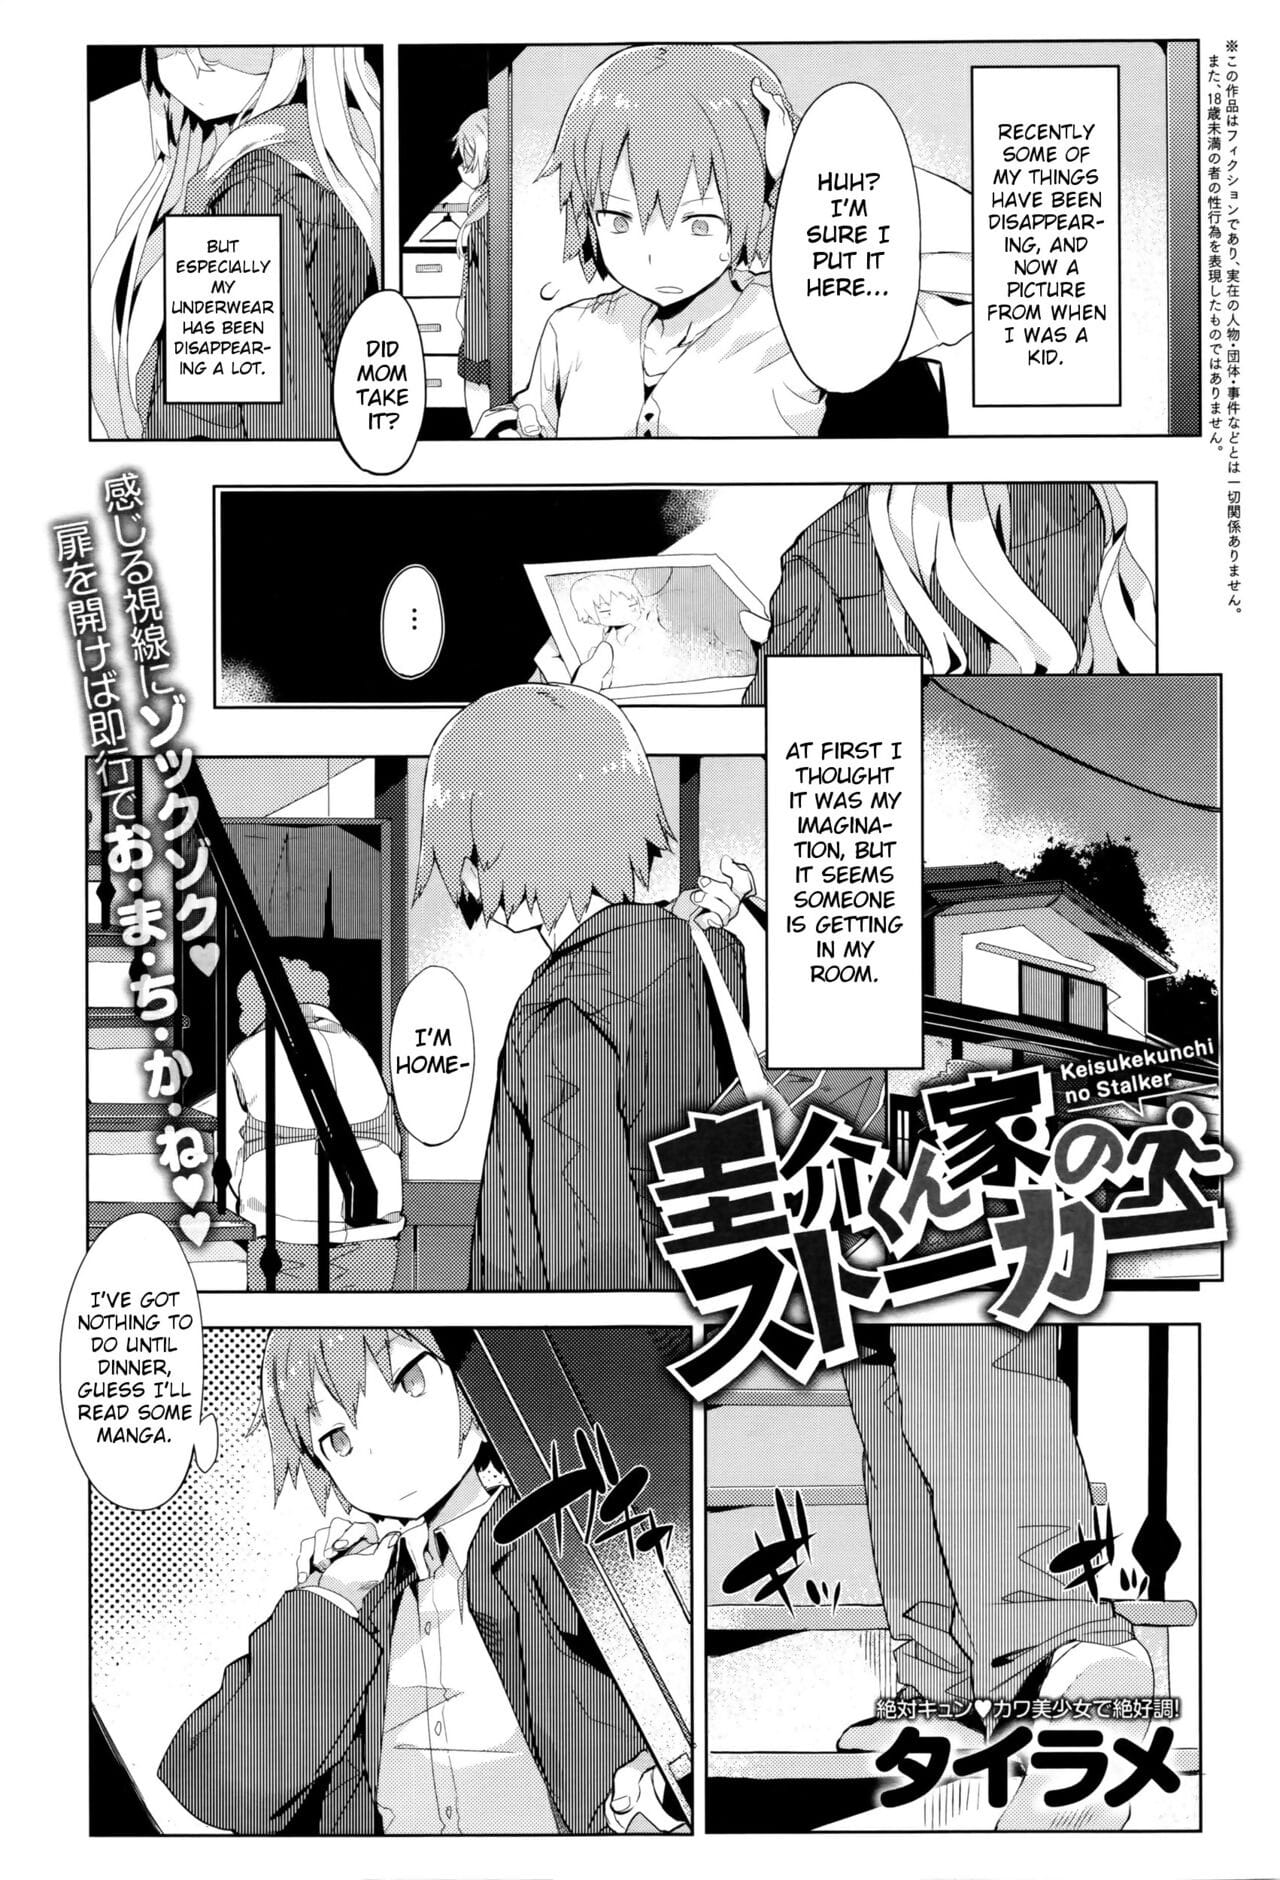 Keisuke-kun-chi no Stalker - Keisuke-kuns House Stalker page 1